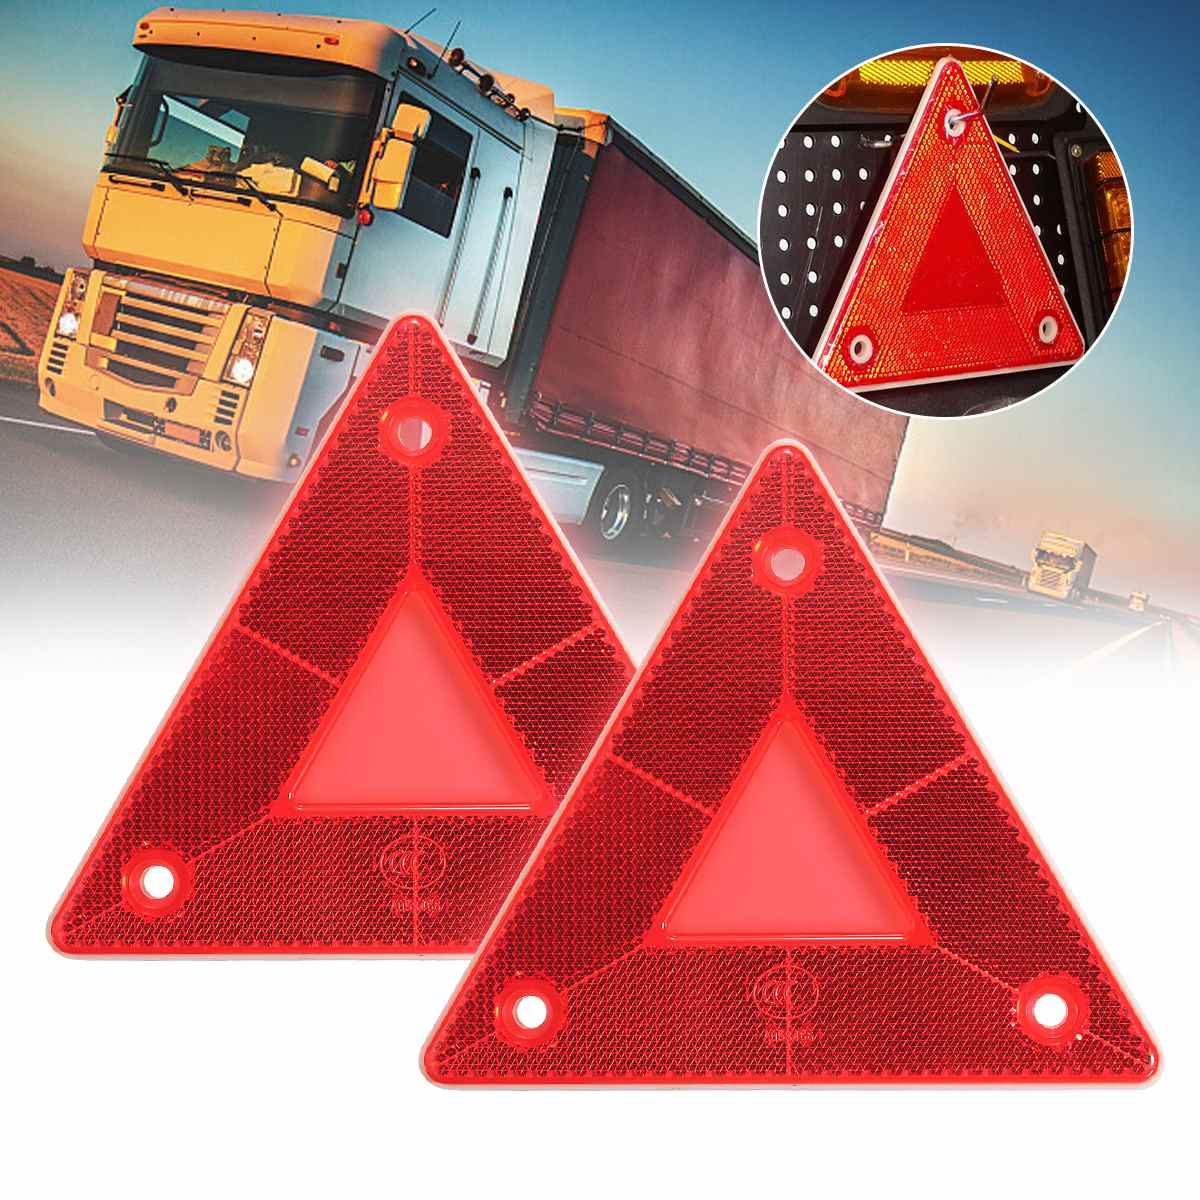 2 stk trekant rød reflekterende bil advarsel om nedbrud i bil til lastbiler med trailere campingvogne lastbilbus